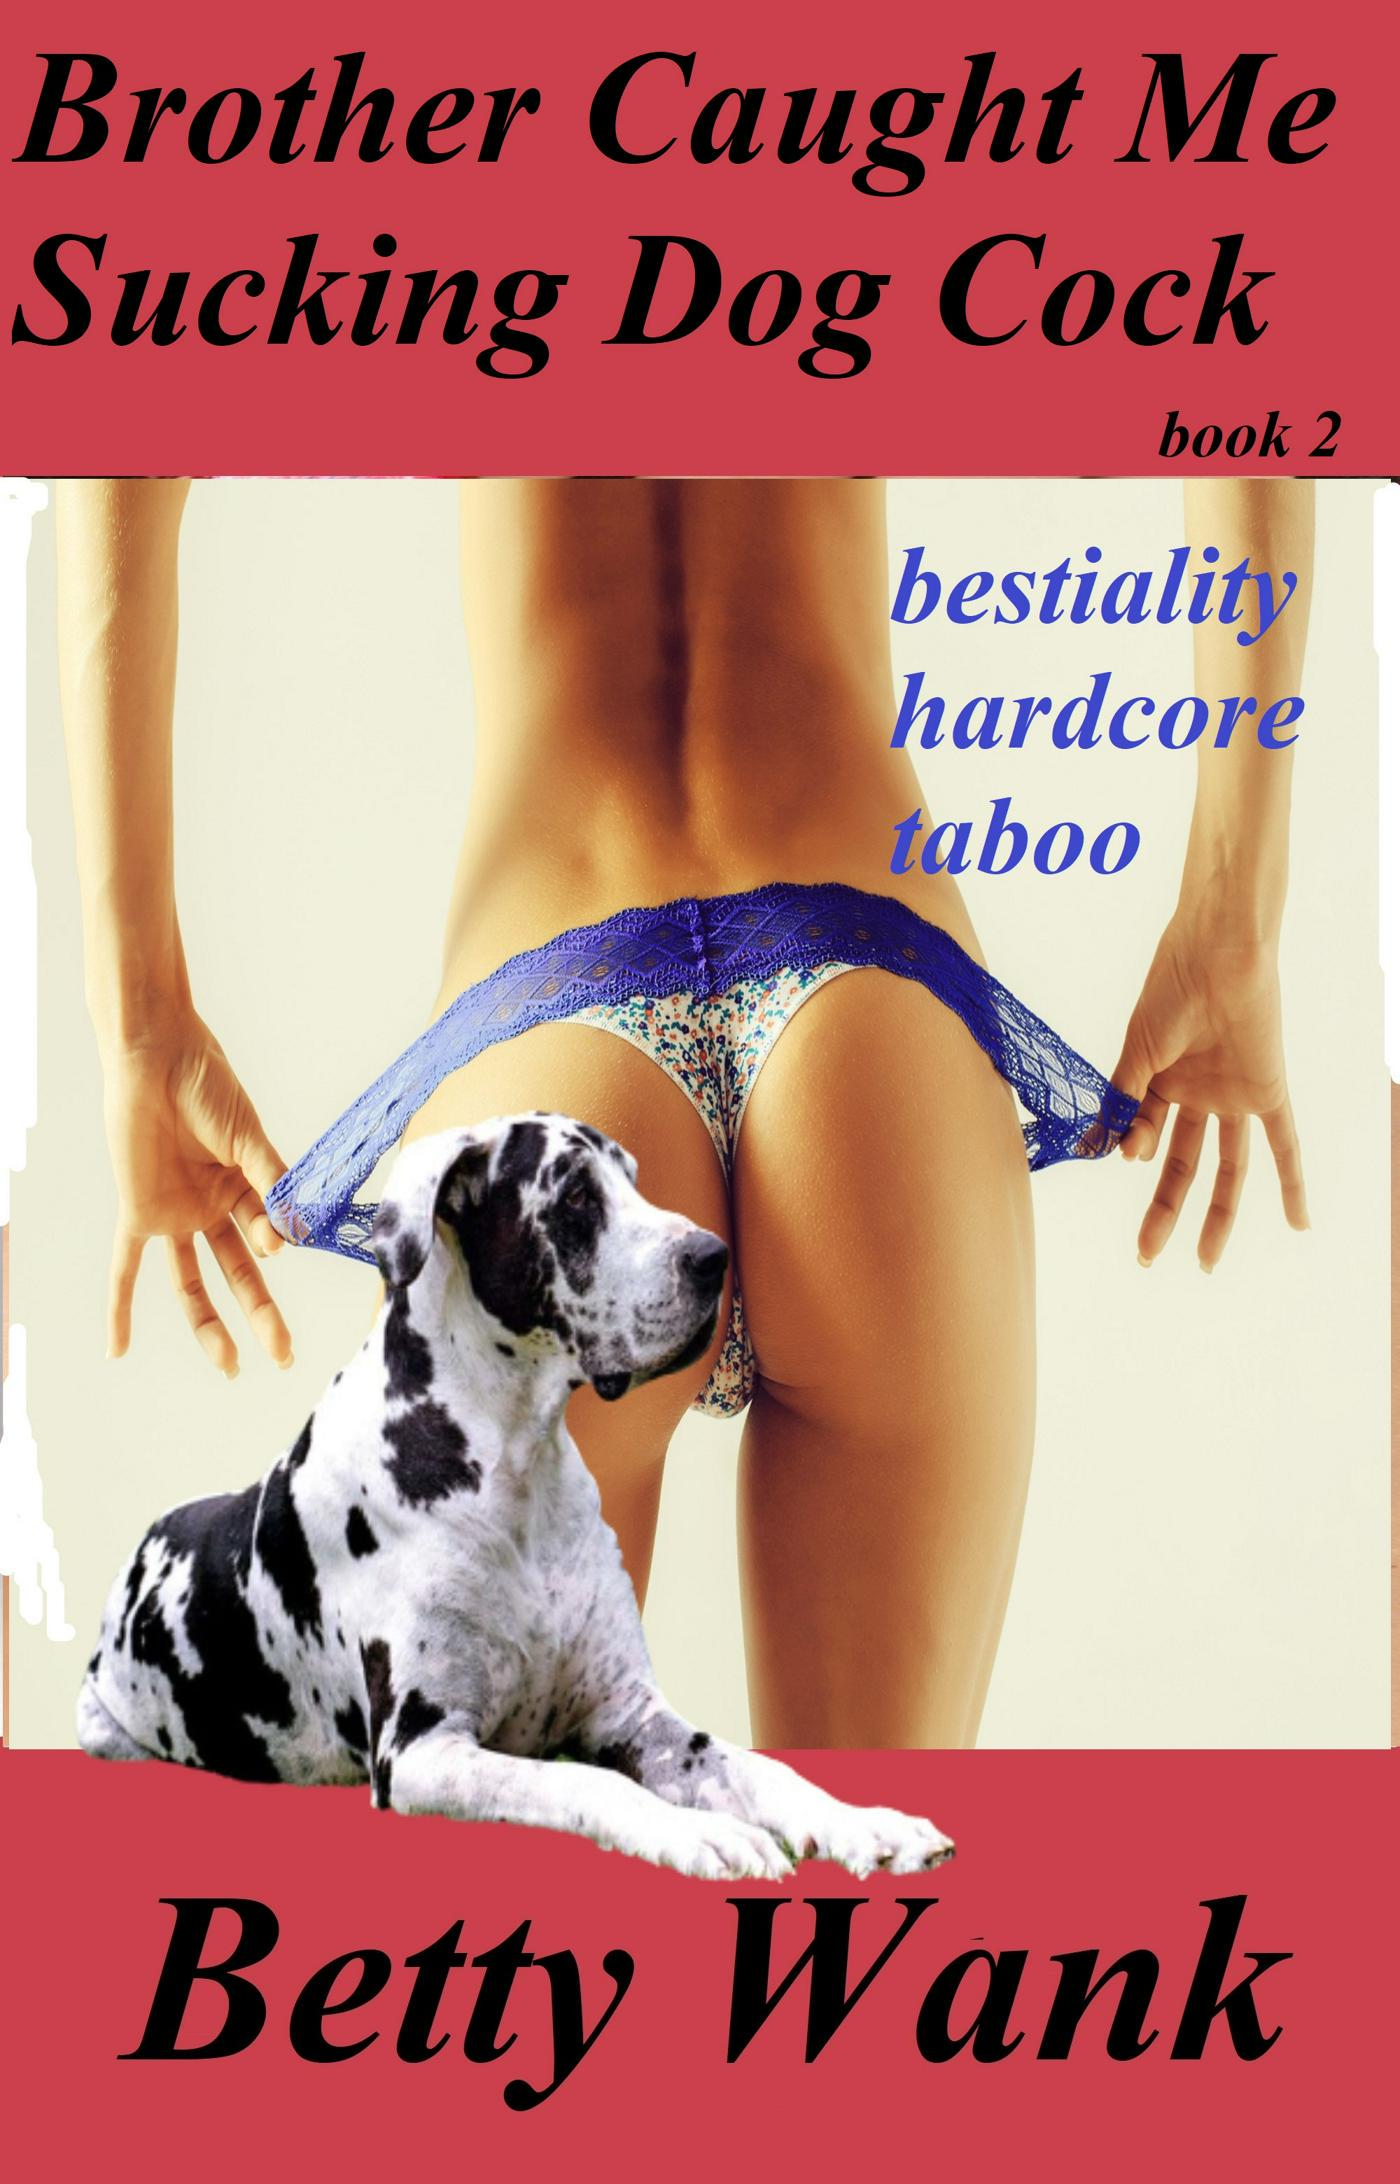 Dog Cum Sex - Smashwords â€“ Brother Caught Me Sucking Dog Cock â€“ a book by Betty Wank